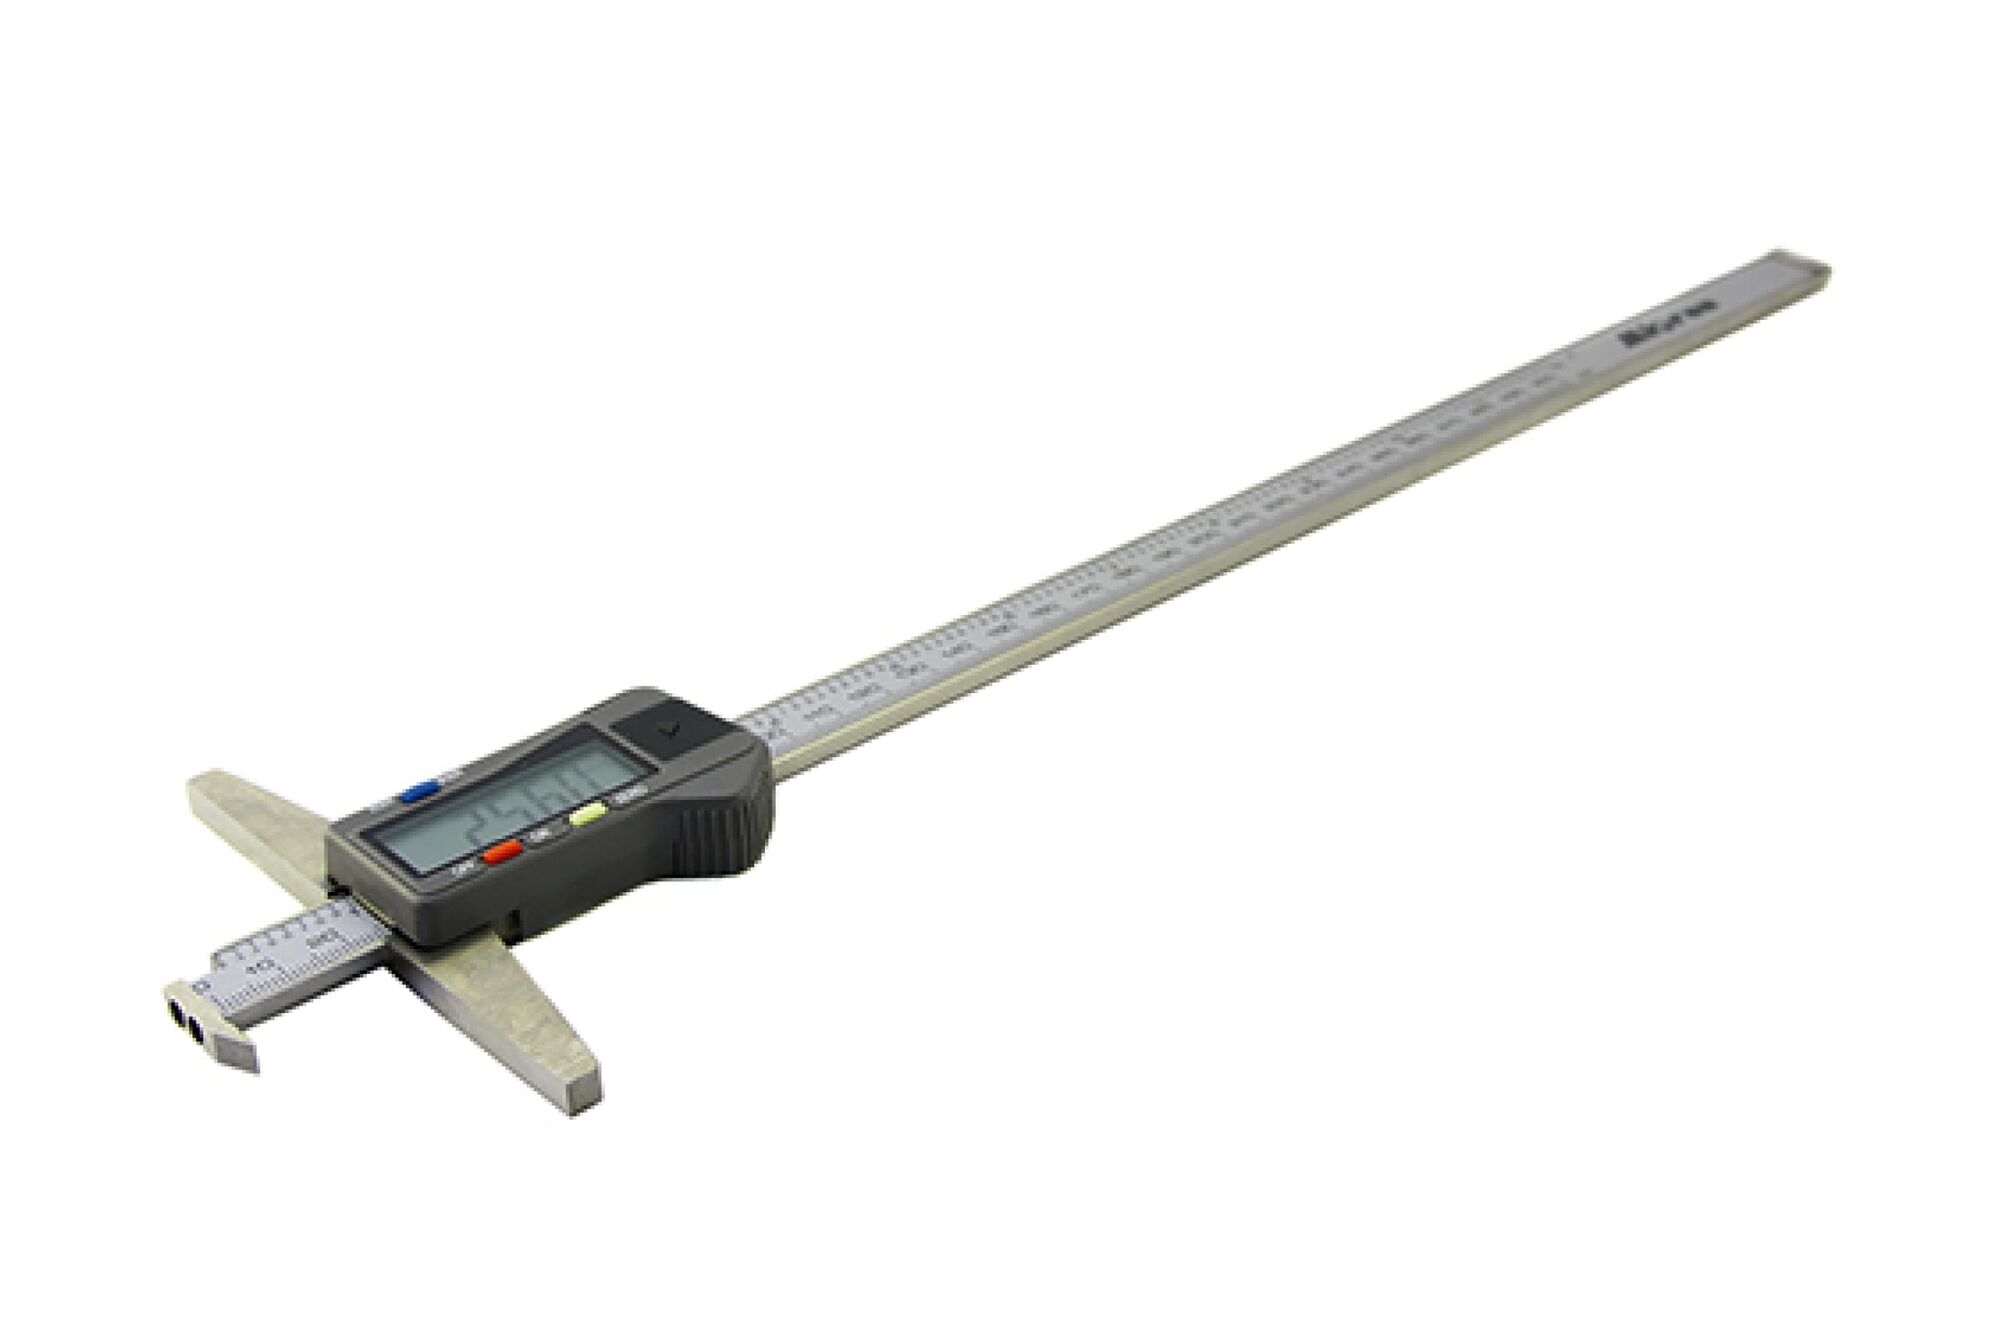 Электронный штангенглубиномер с толщиномером Micron ШГ 750 мм 0.01 МИК 61484